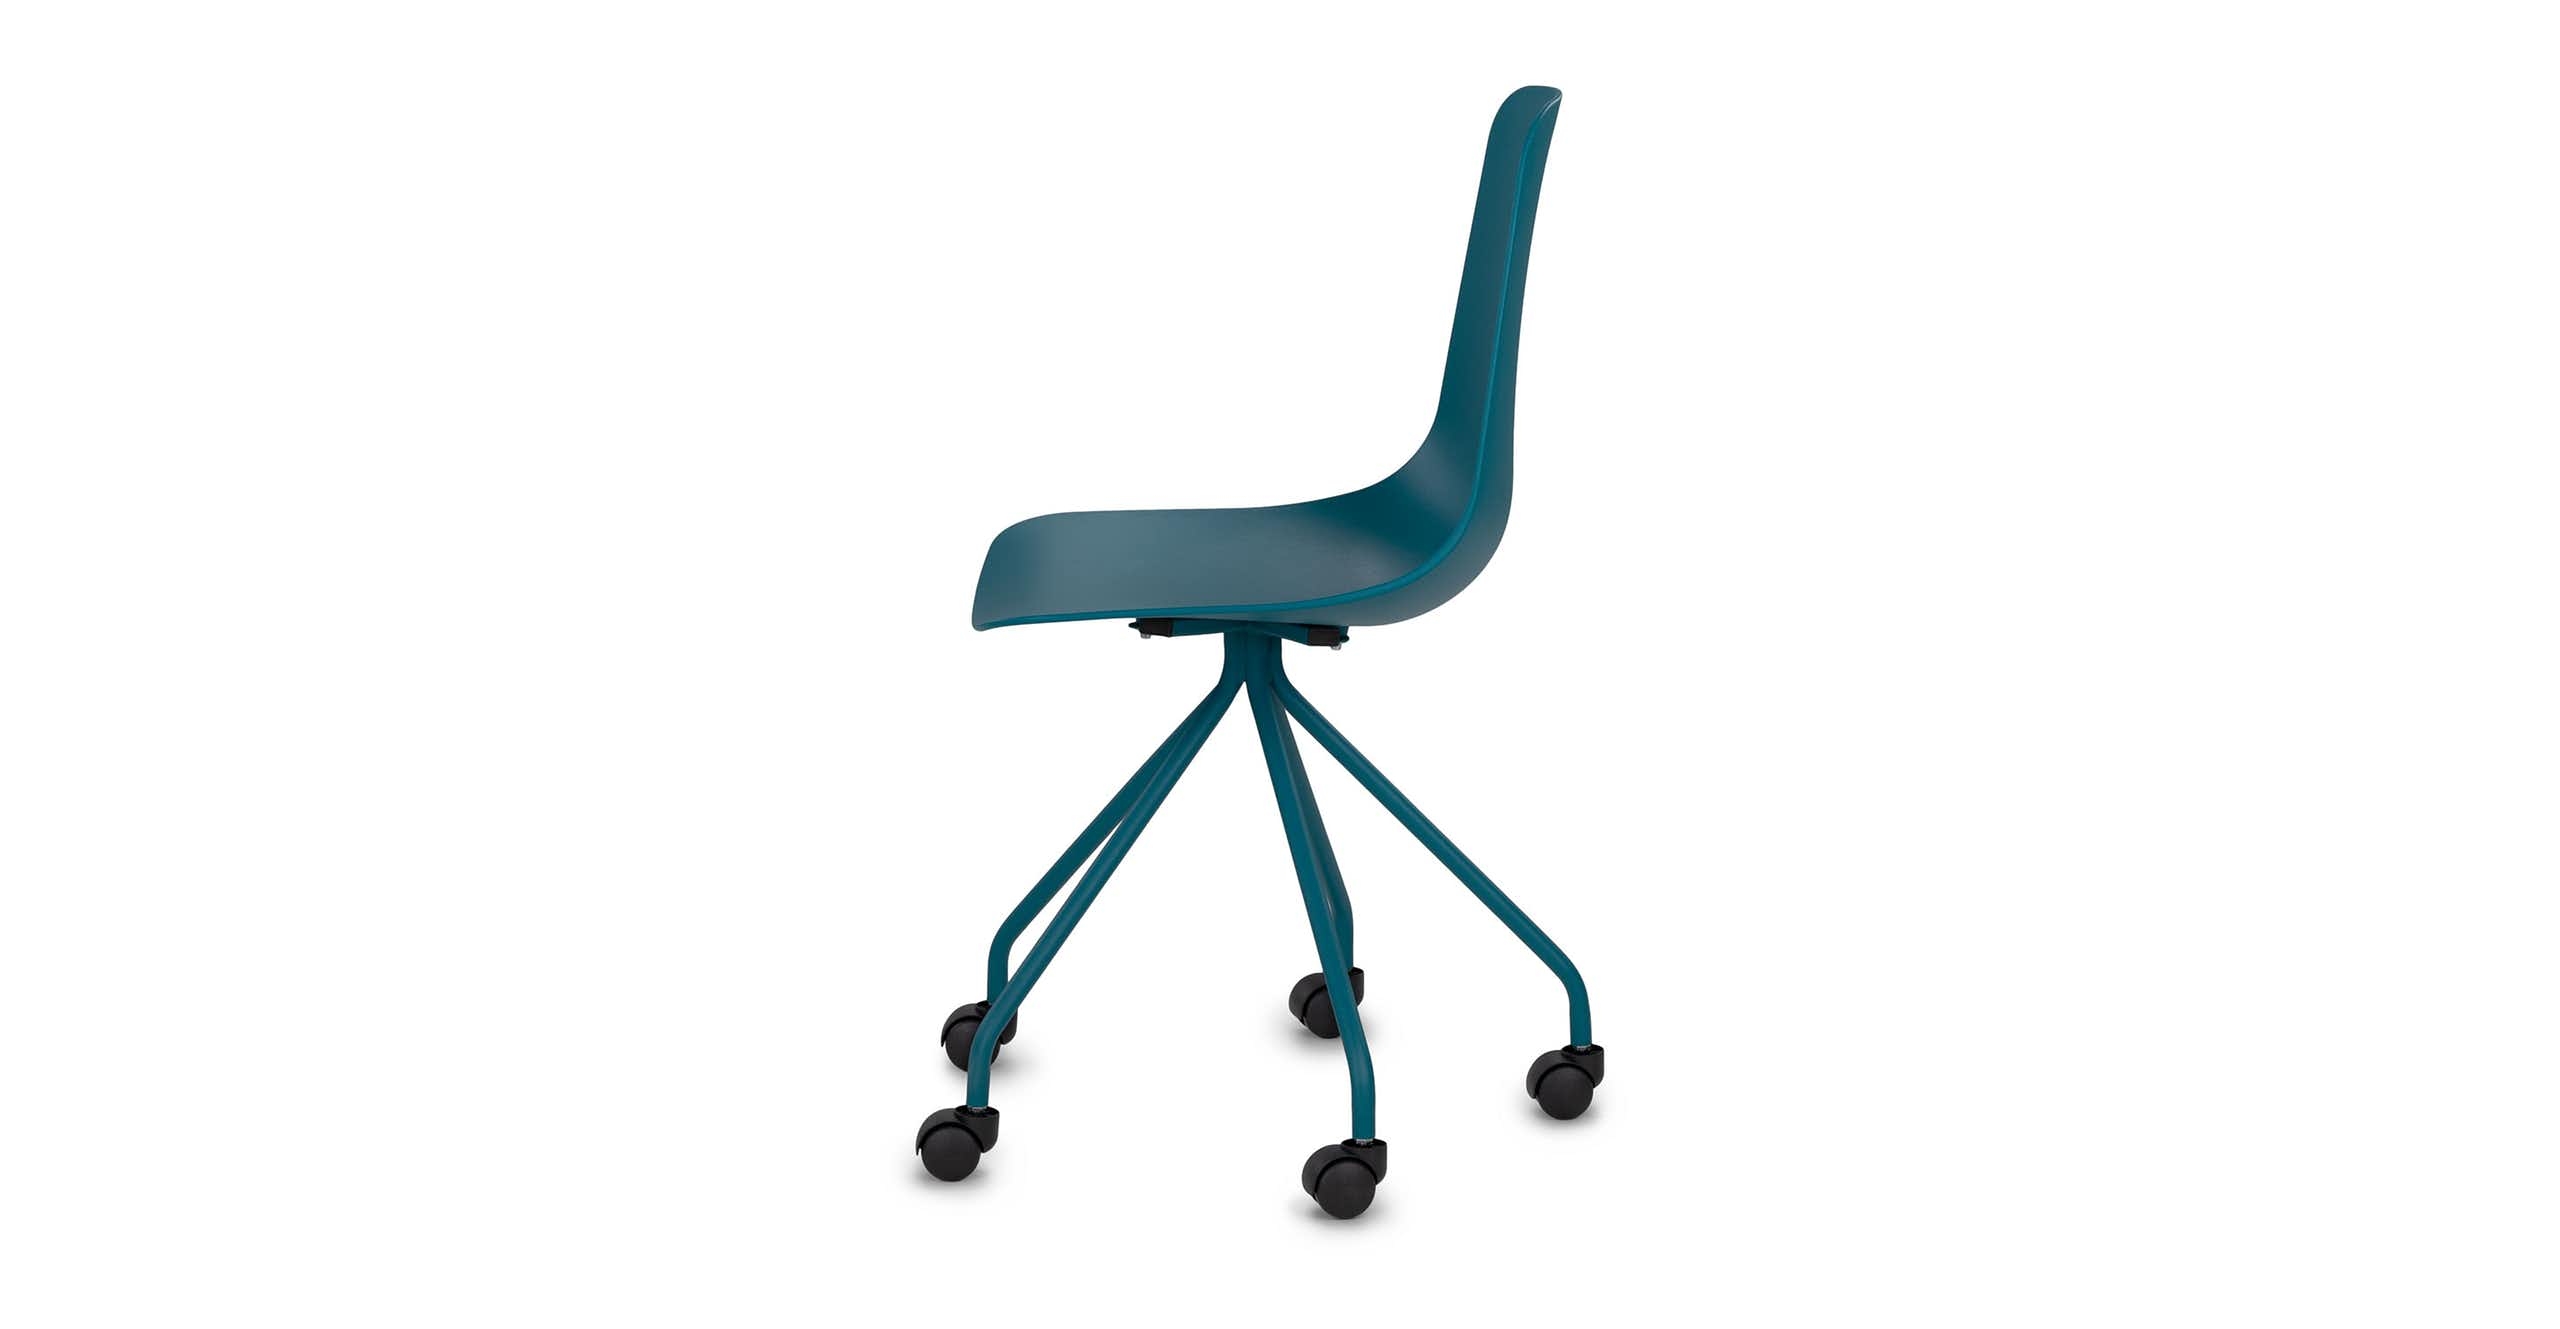 Svelti Deep Cove Teal Office Chair - Image 2